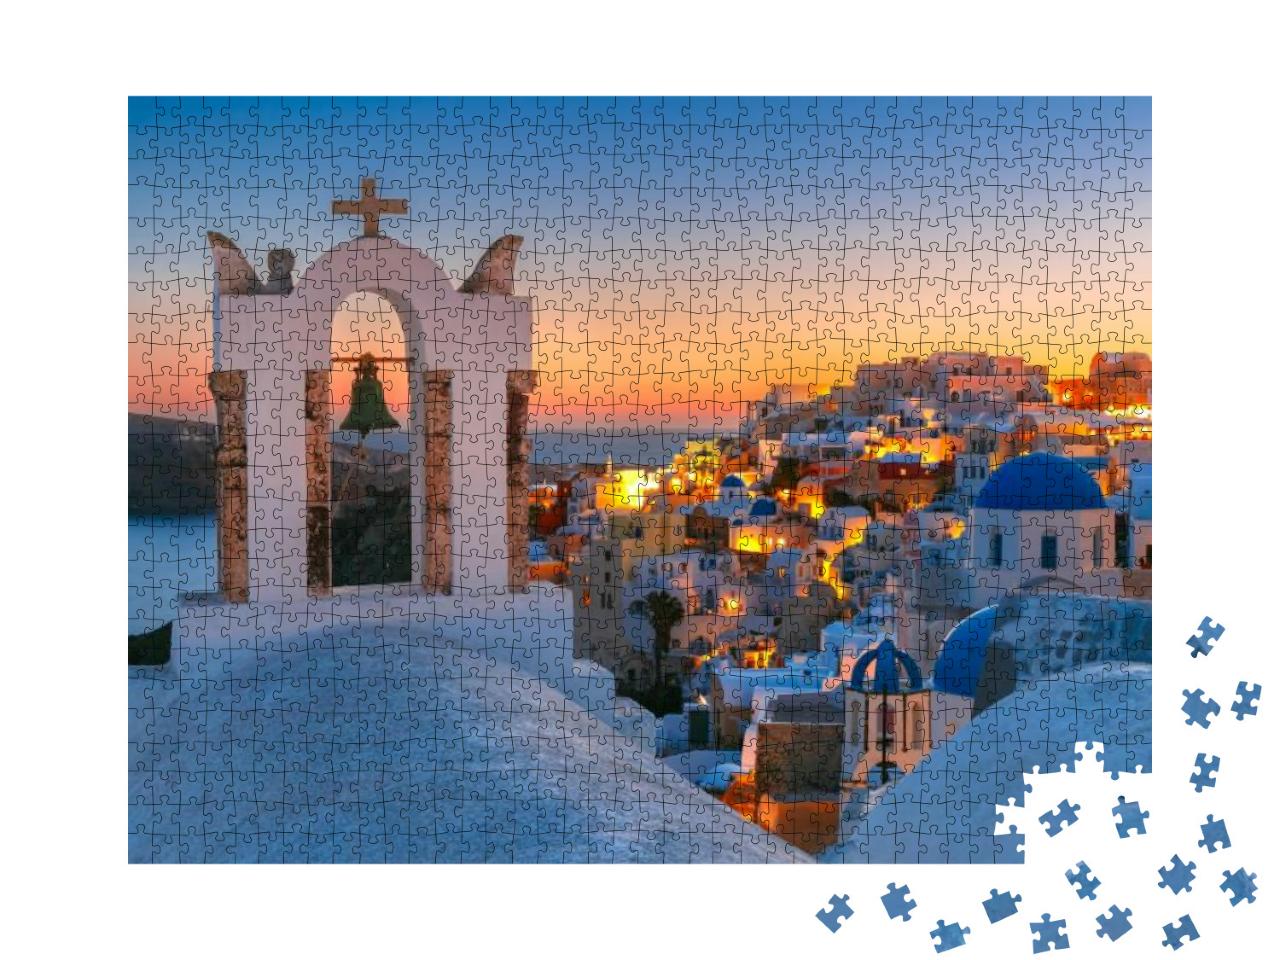 Puzzle 1000 Teile „Oia im goldenem Sonnenuntergang, Insel Santorini, Griechenland“